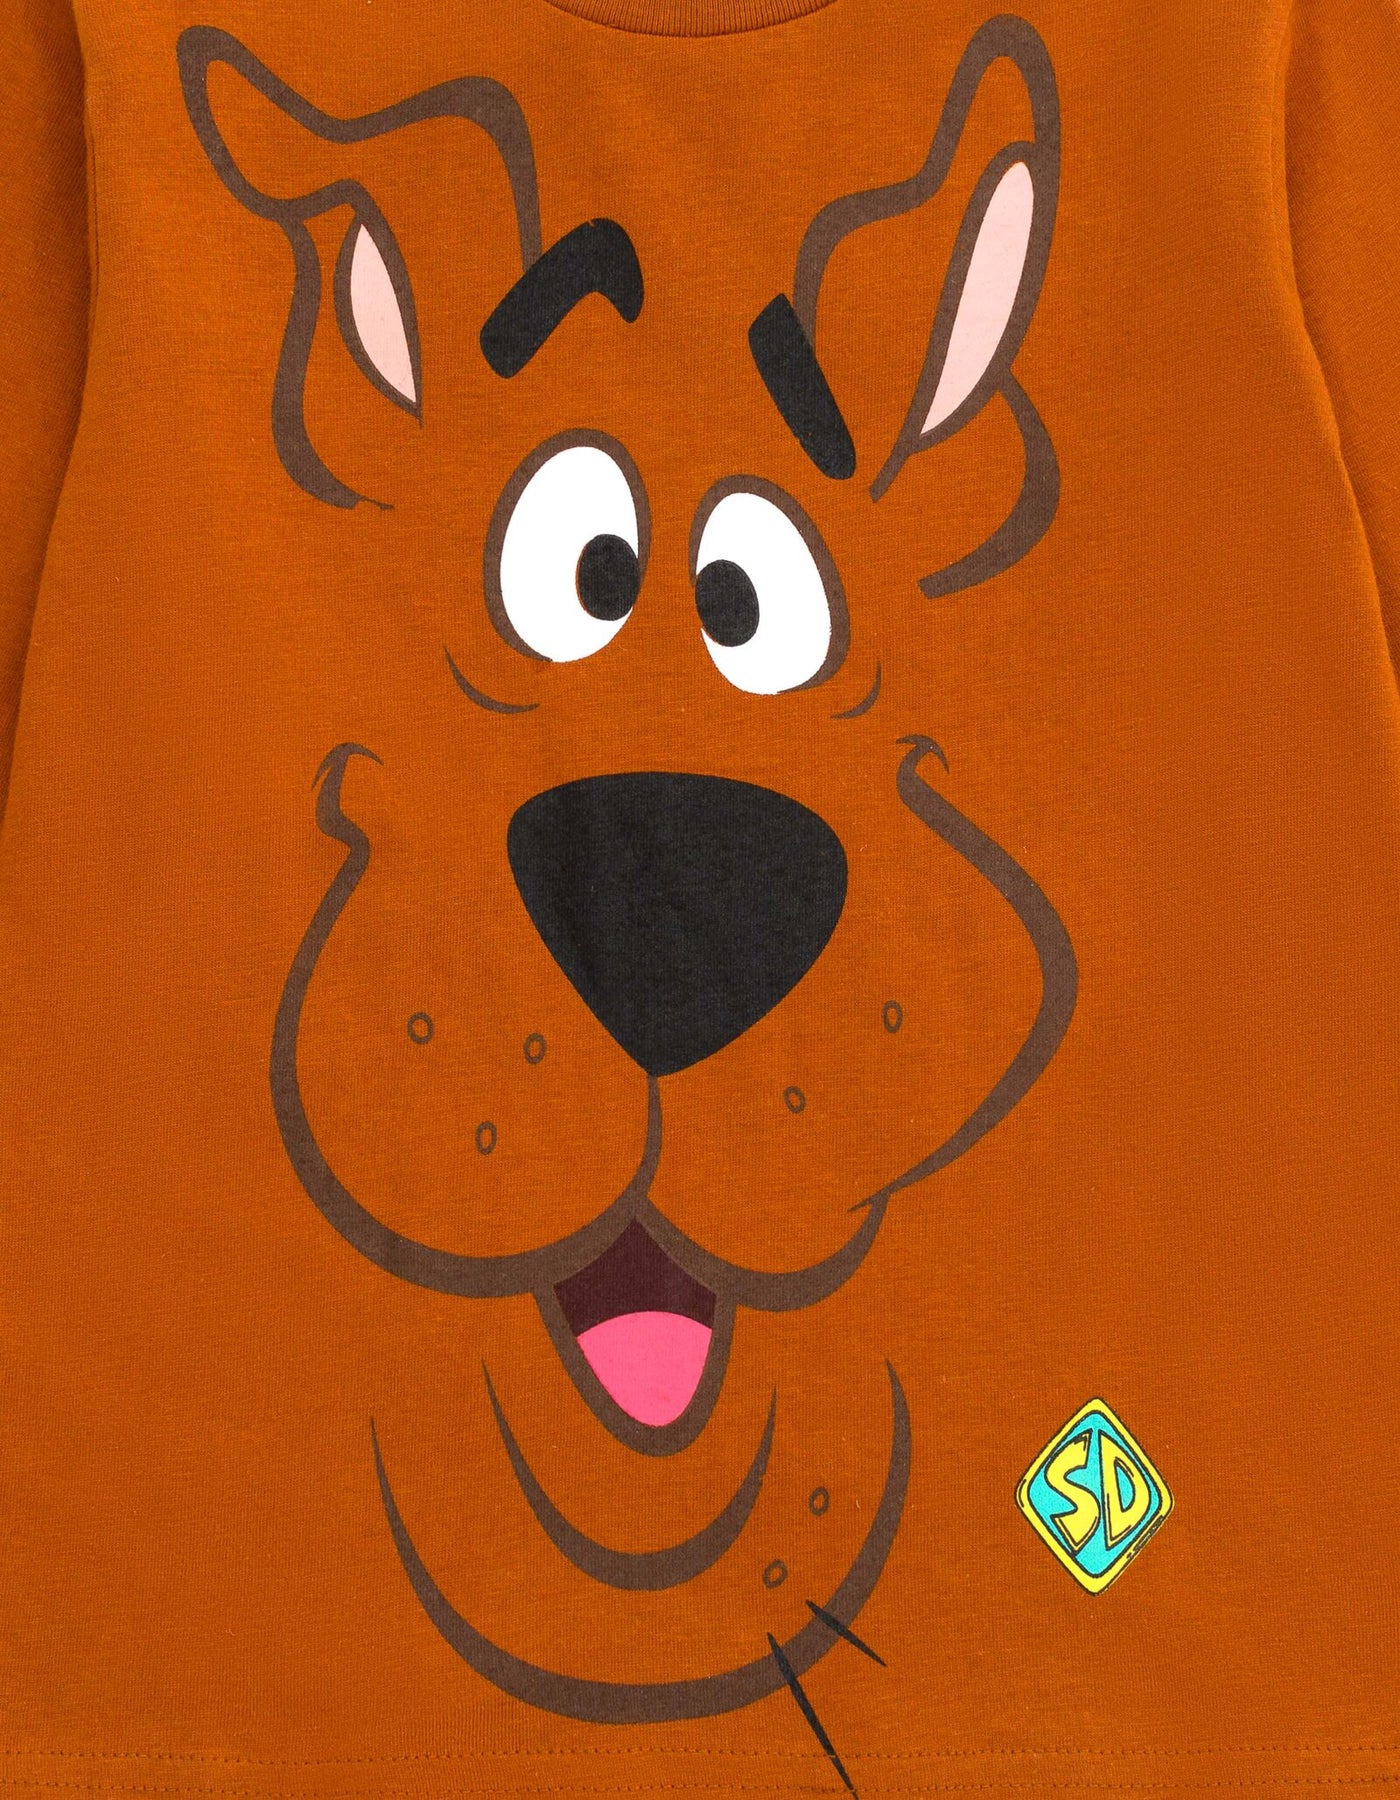 Scooby-Doo Scooby Doo Long Sleeve T-Shirt